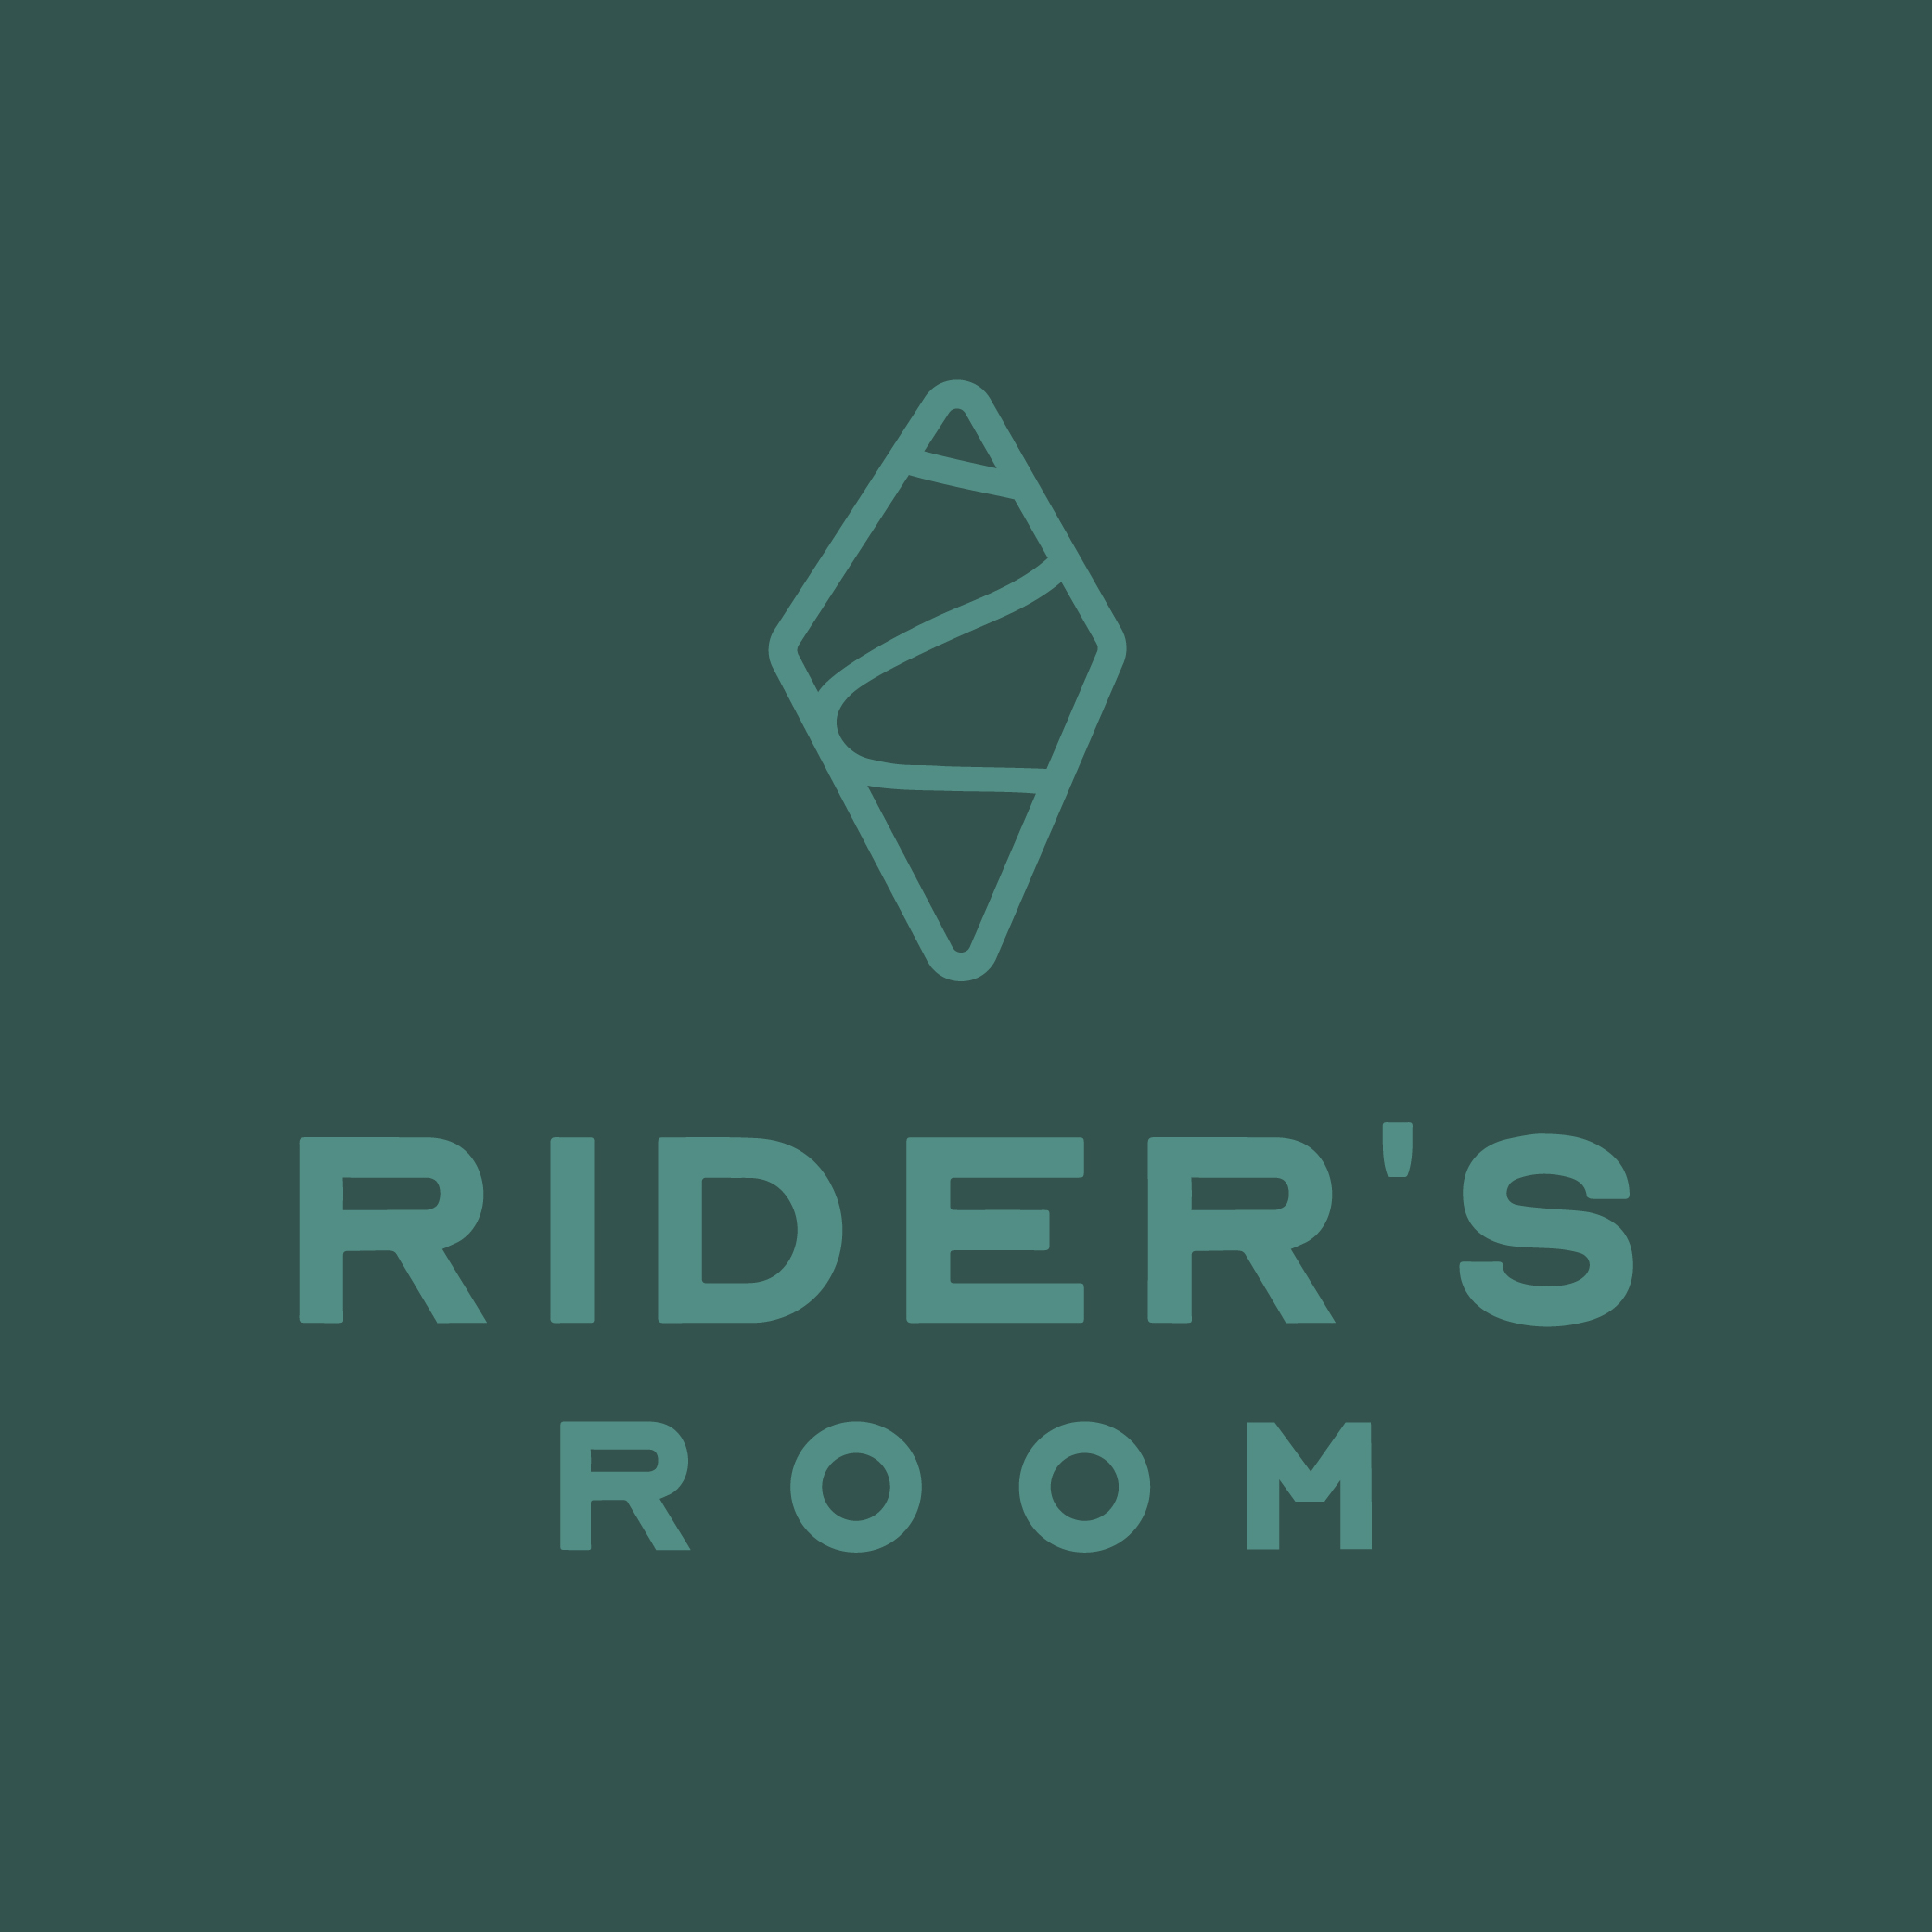 The Rider's Room logo